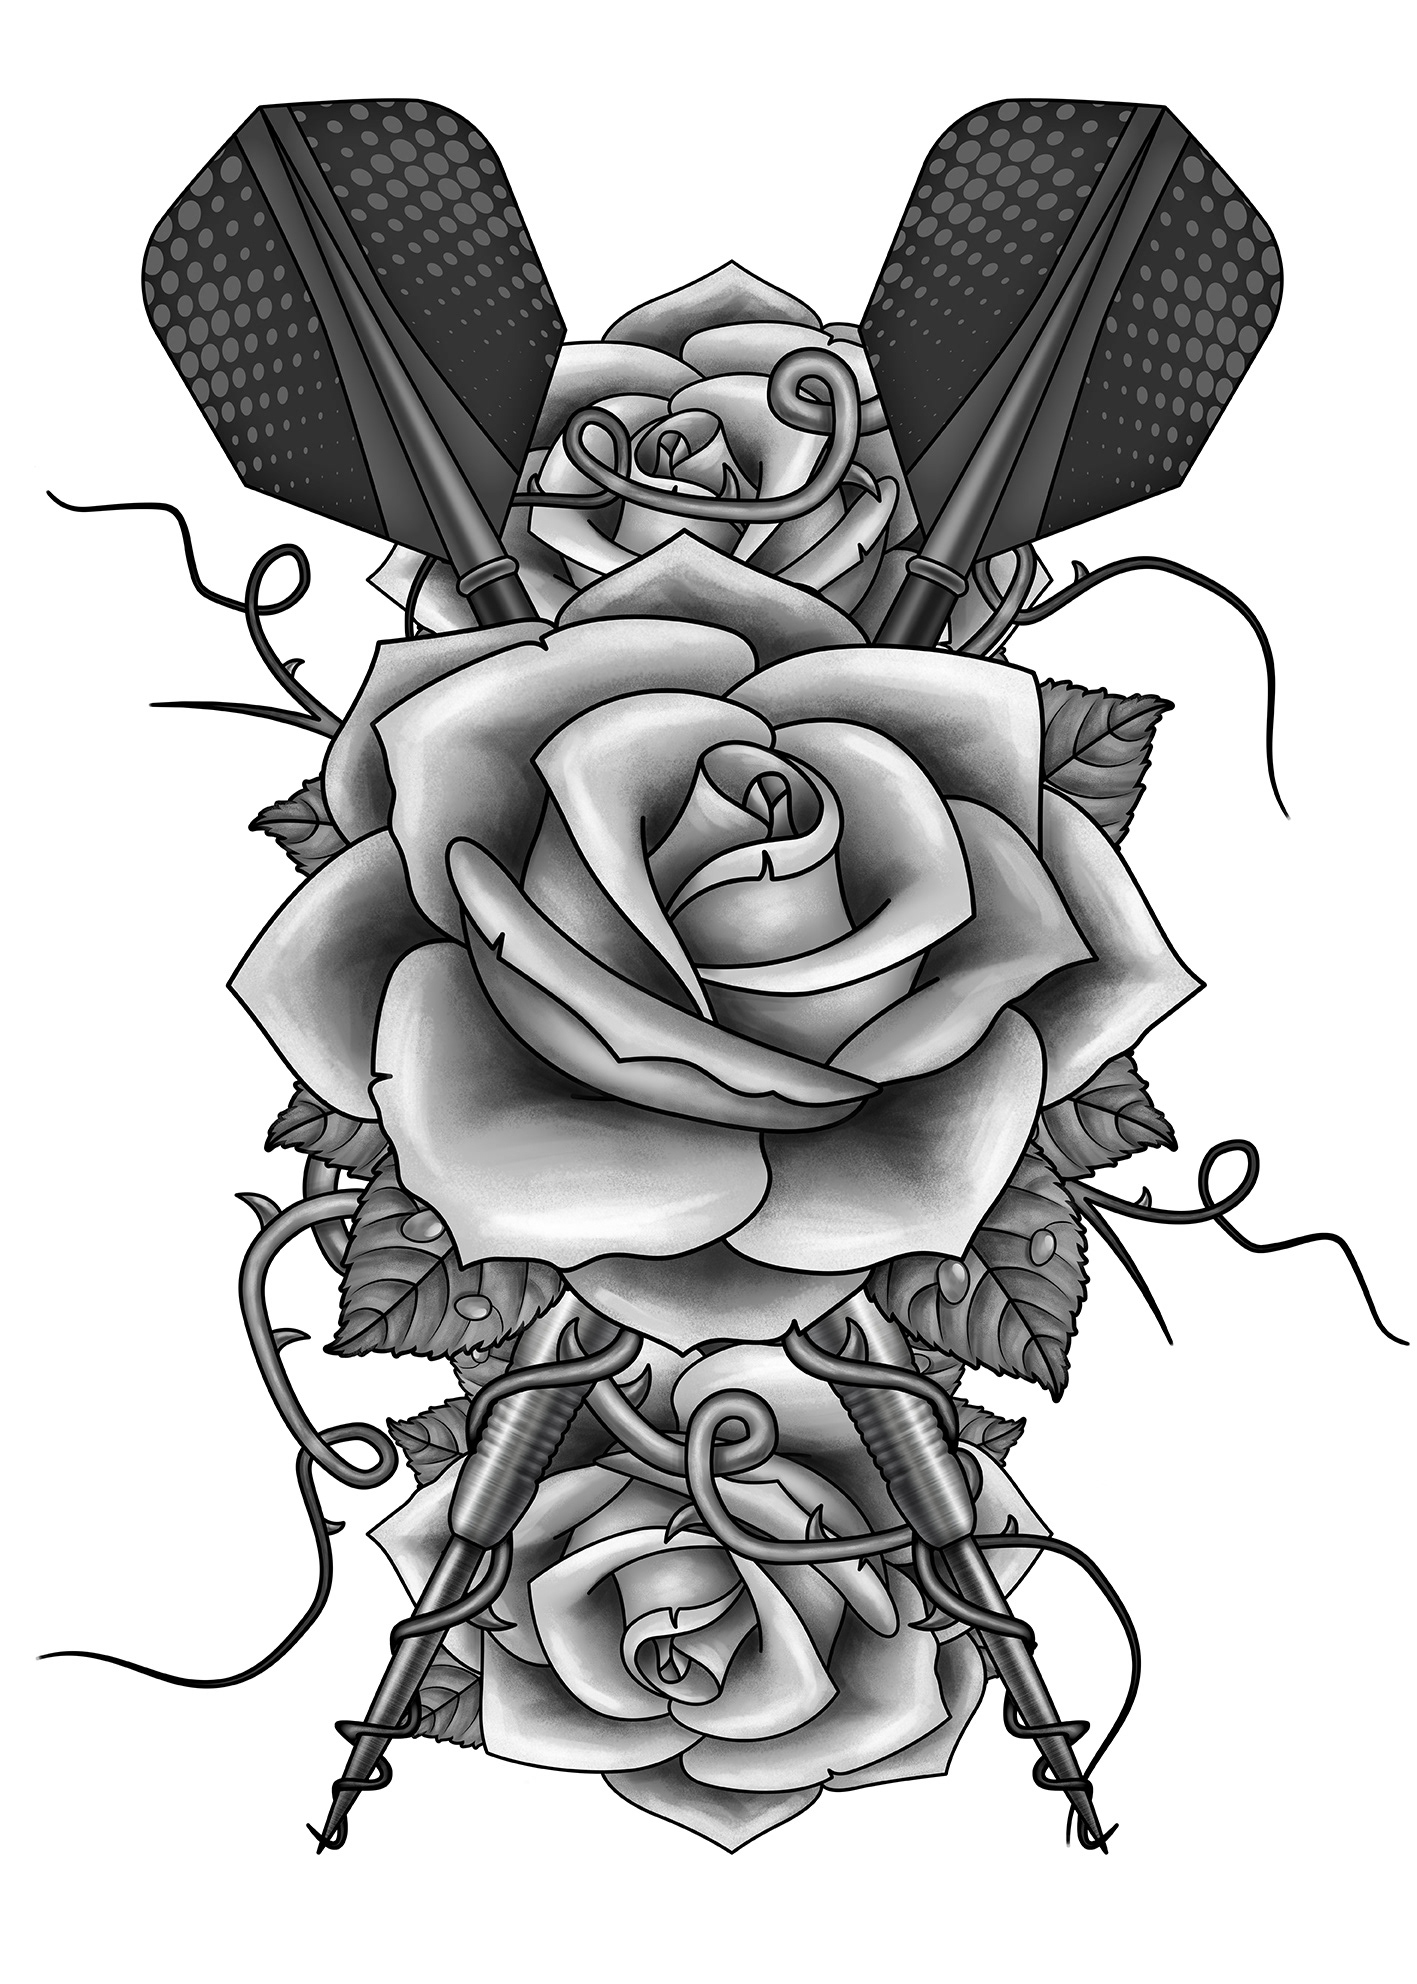 Rose and dart tattoo design on Behance